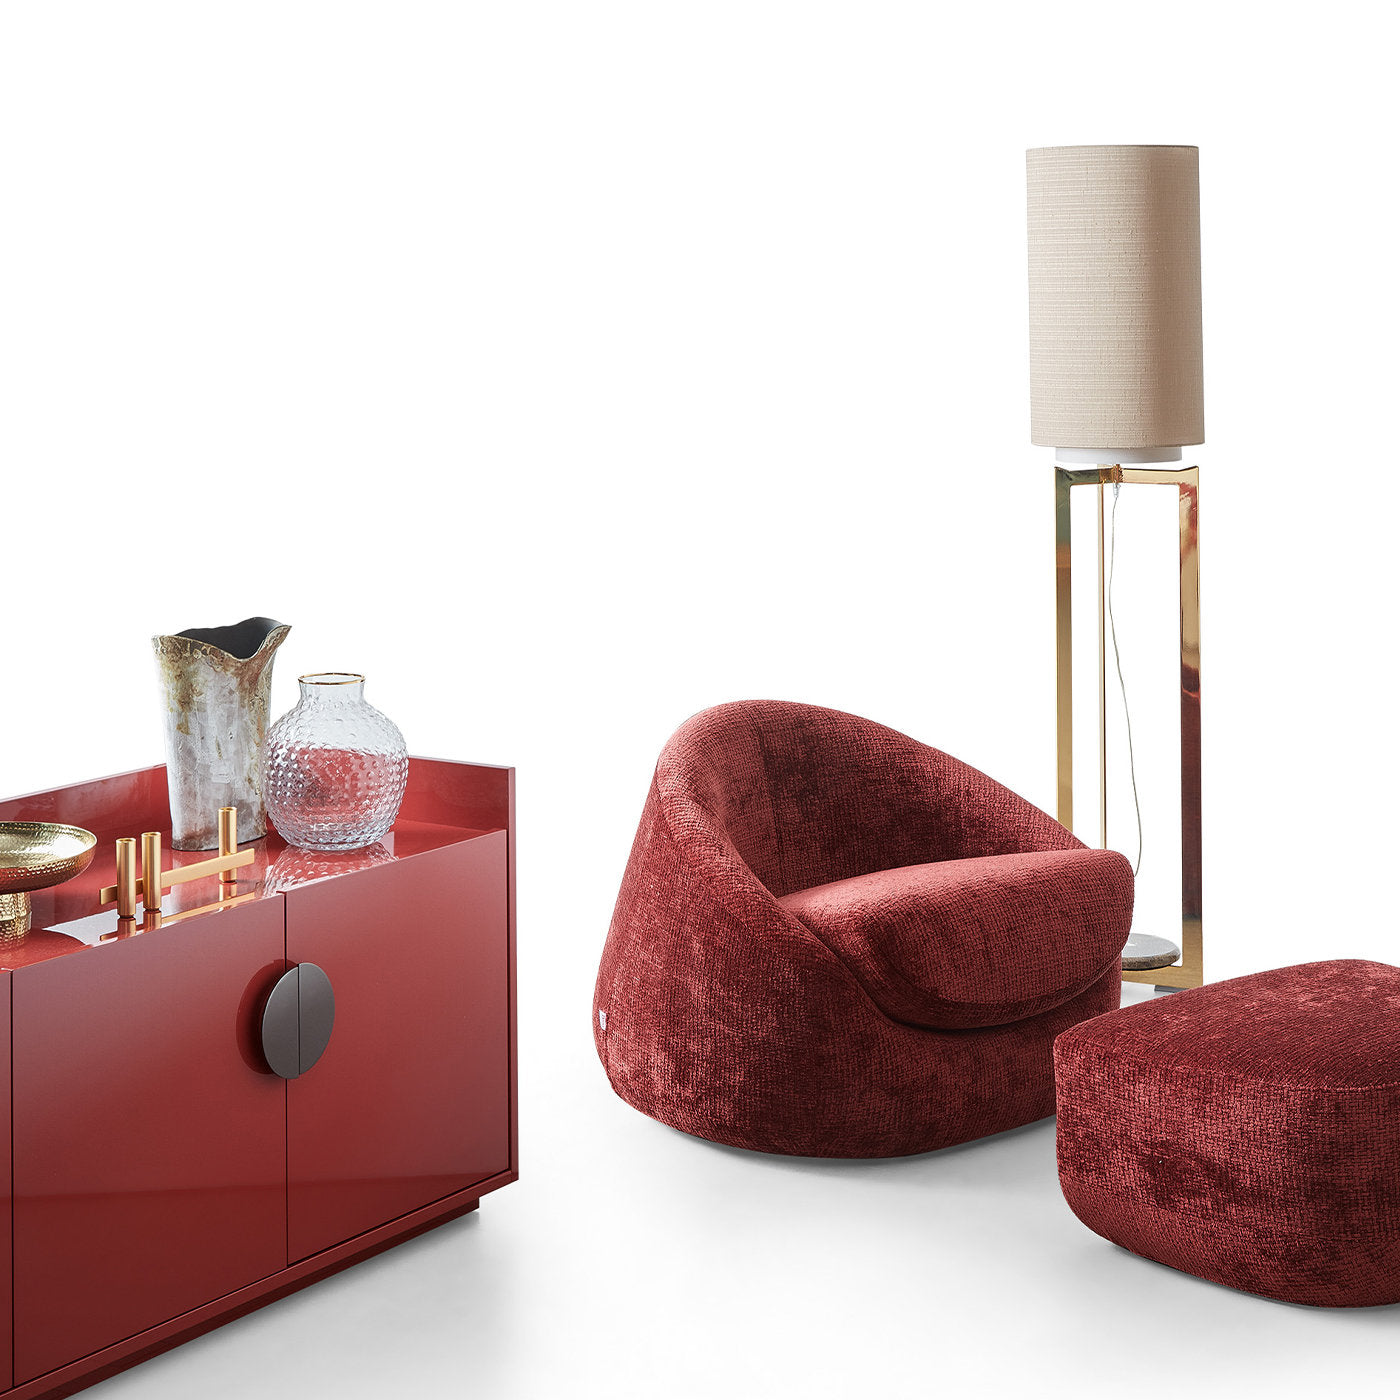 Cuccia Red Armchair and Ottoman by Dema Design - Alternative view 1